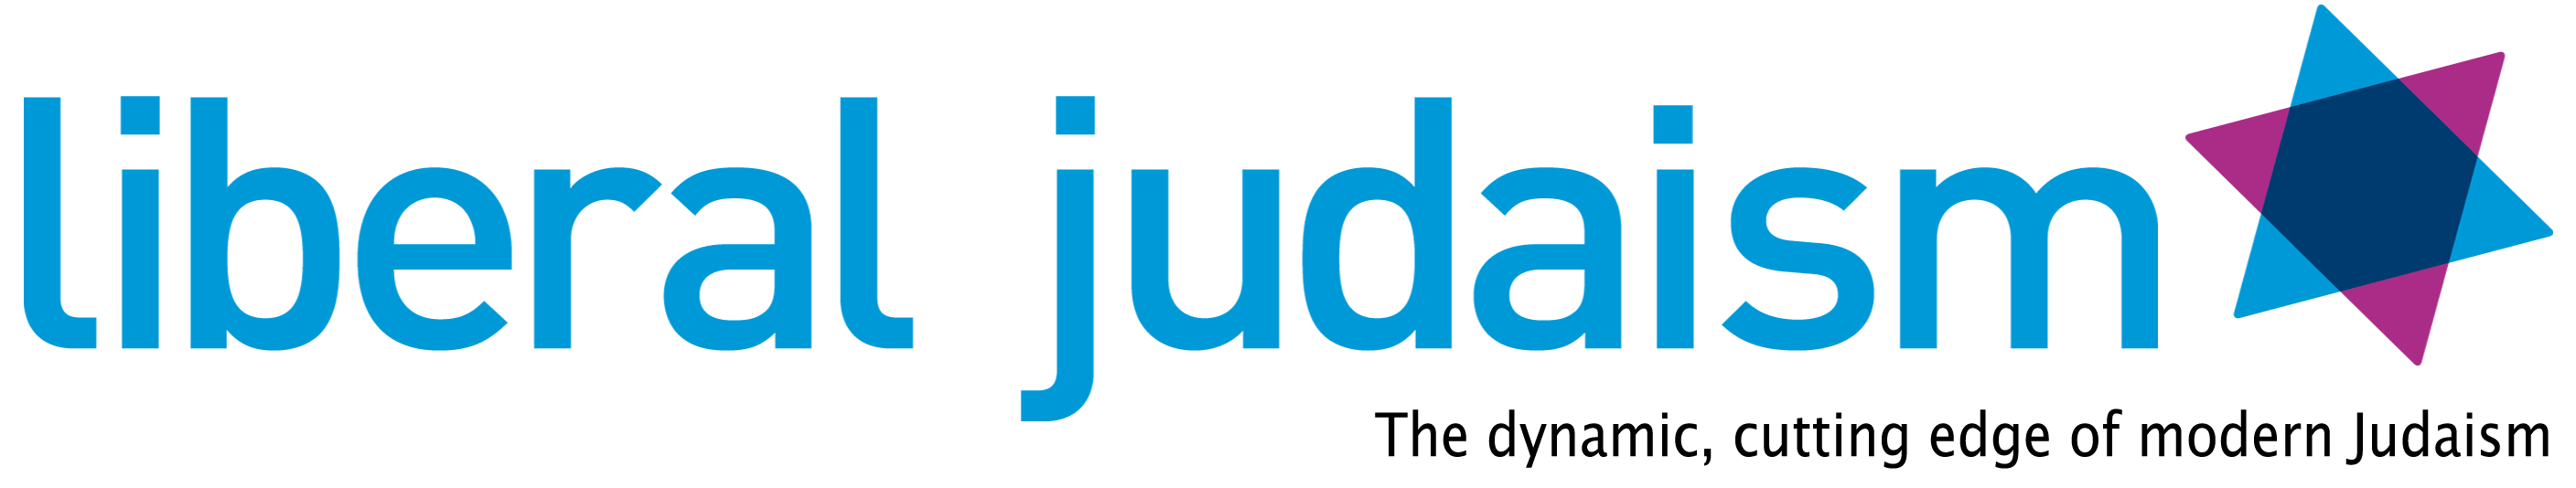 Judaism Logo - Liberal Judaism | The dynamic, cutting edge of modern Judaism